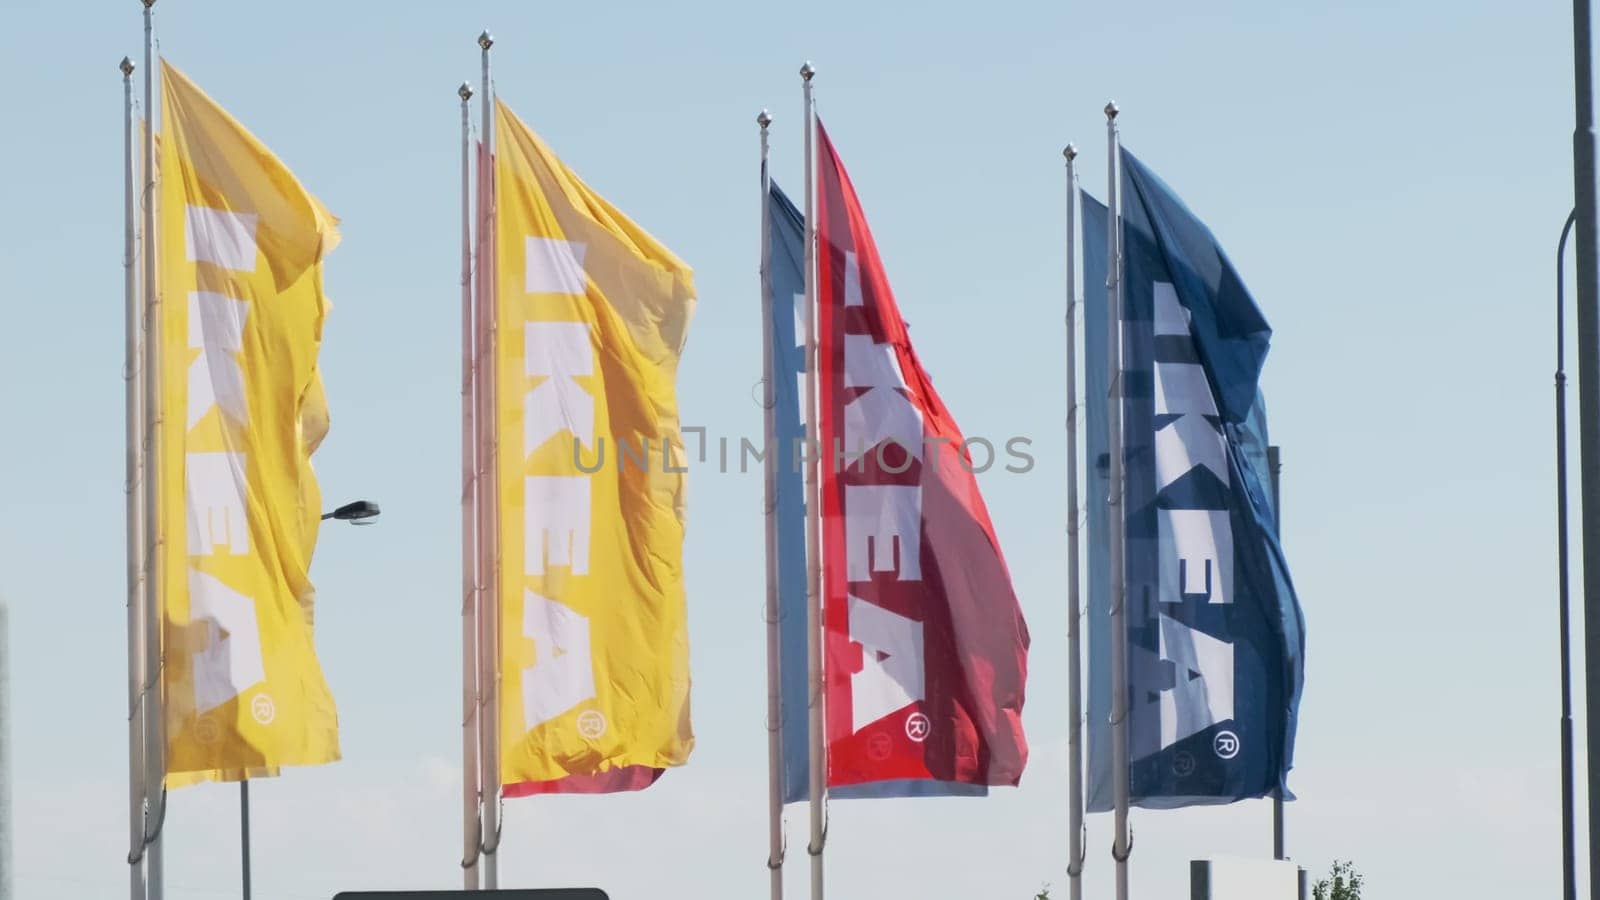 IKEA logo flags in the wind against sky, by vladimka